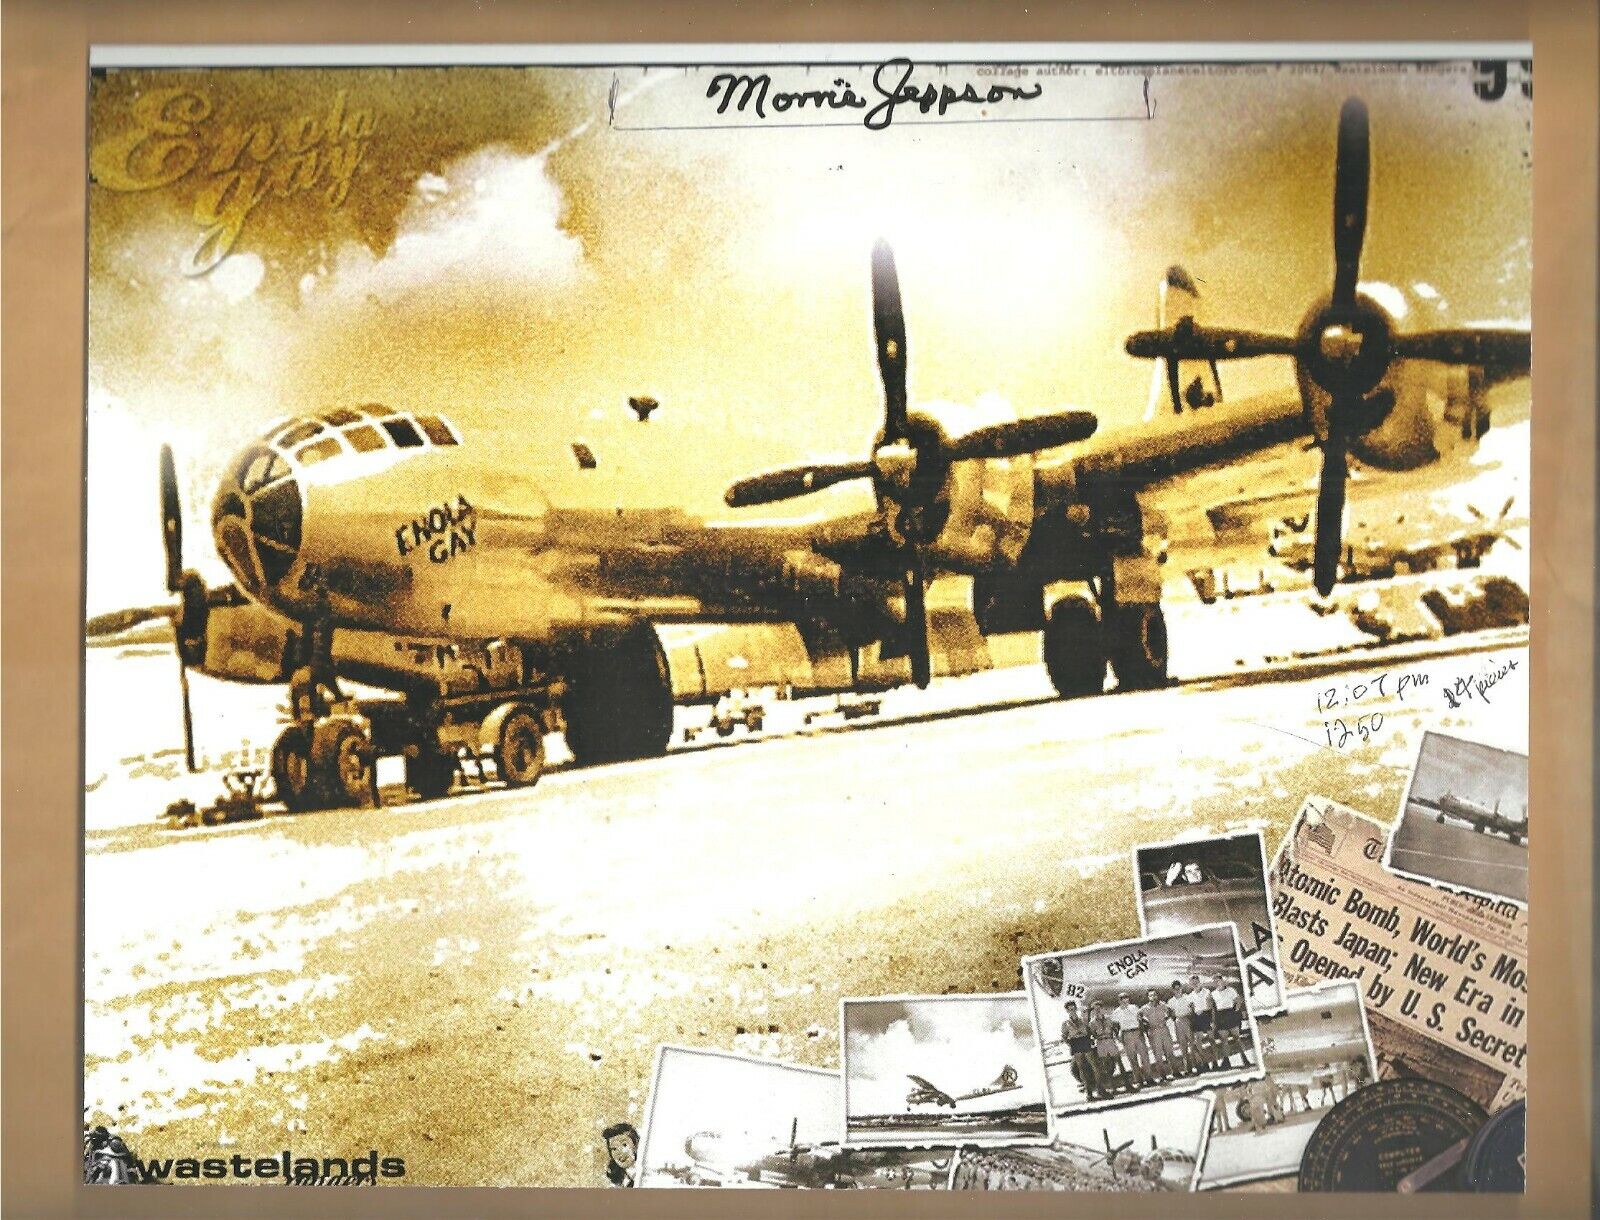  Morris Jeppson B-29 Enola Gay Autographed 8x10 Photo Autograph Hiroshima